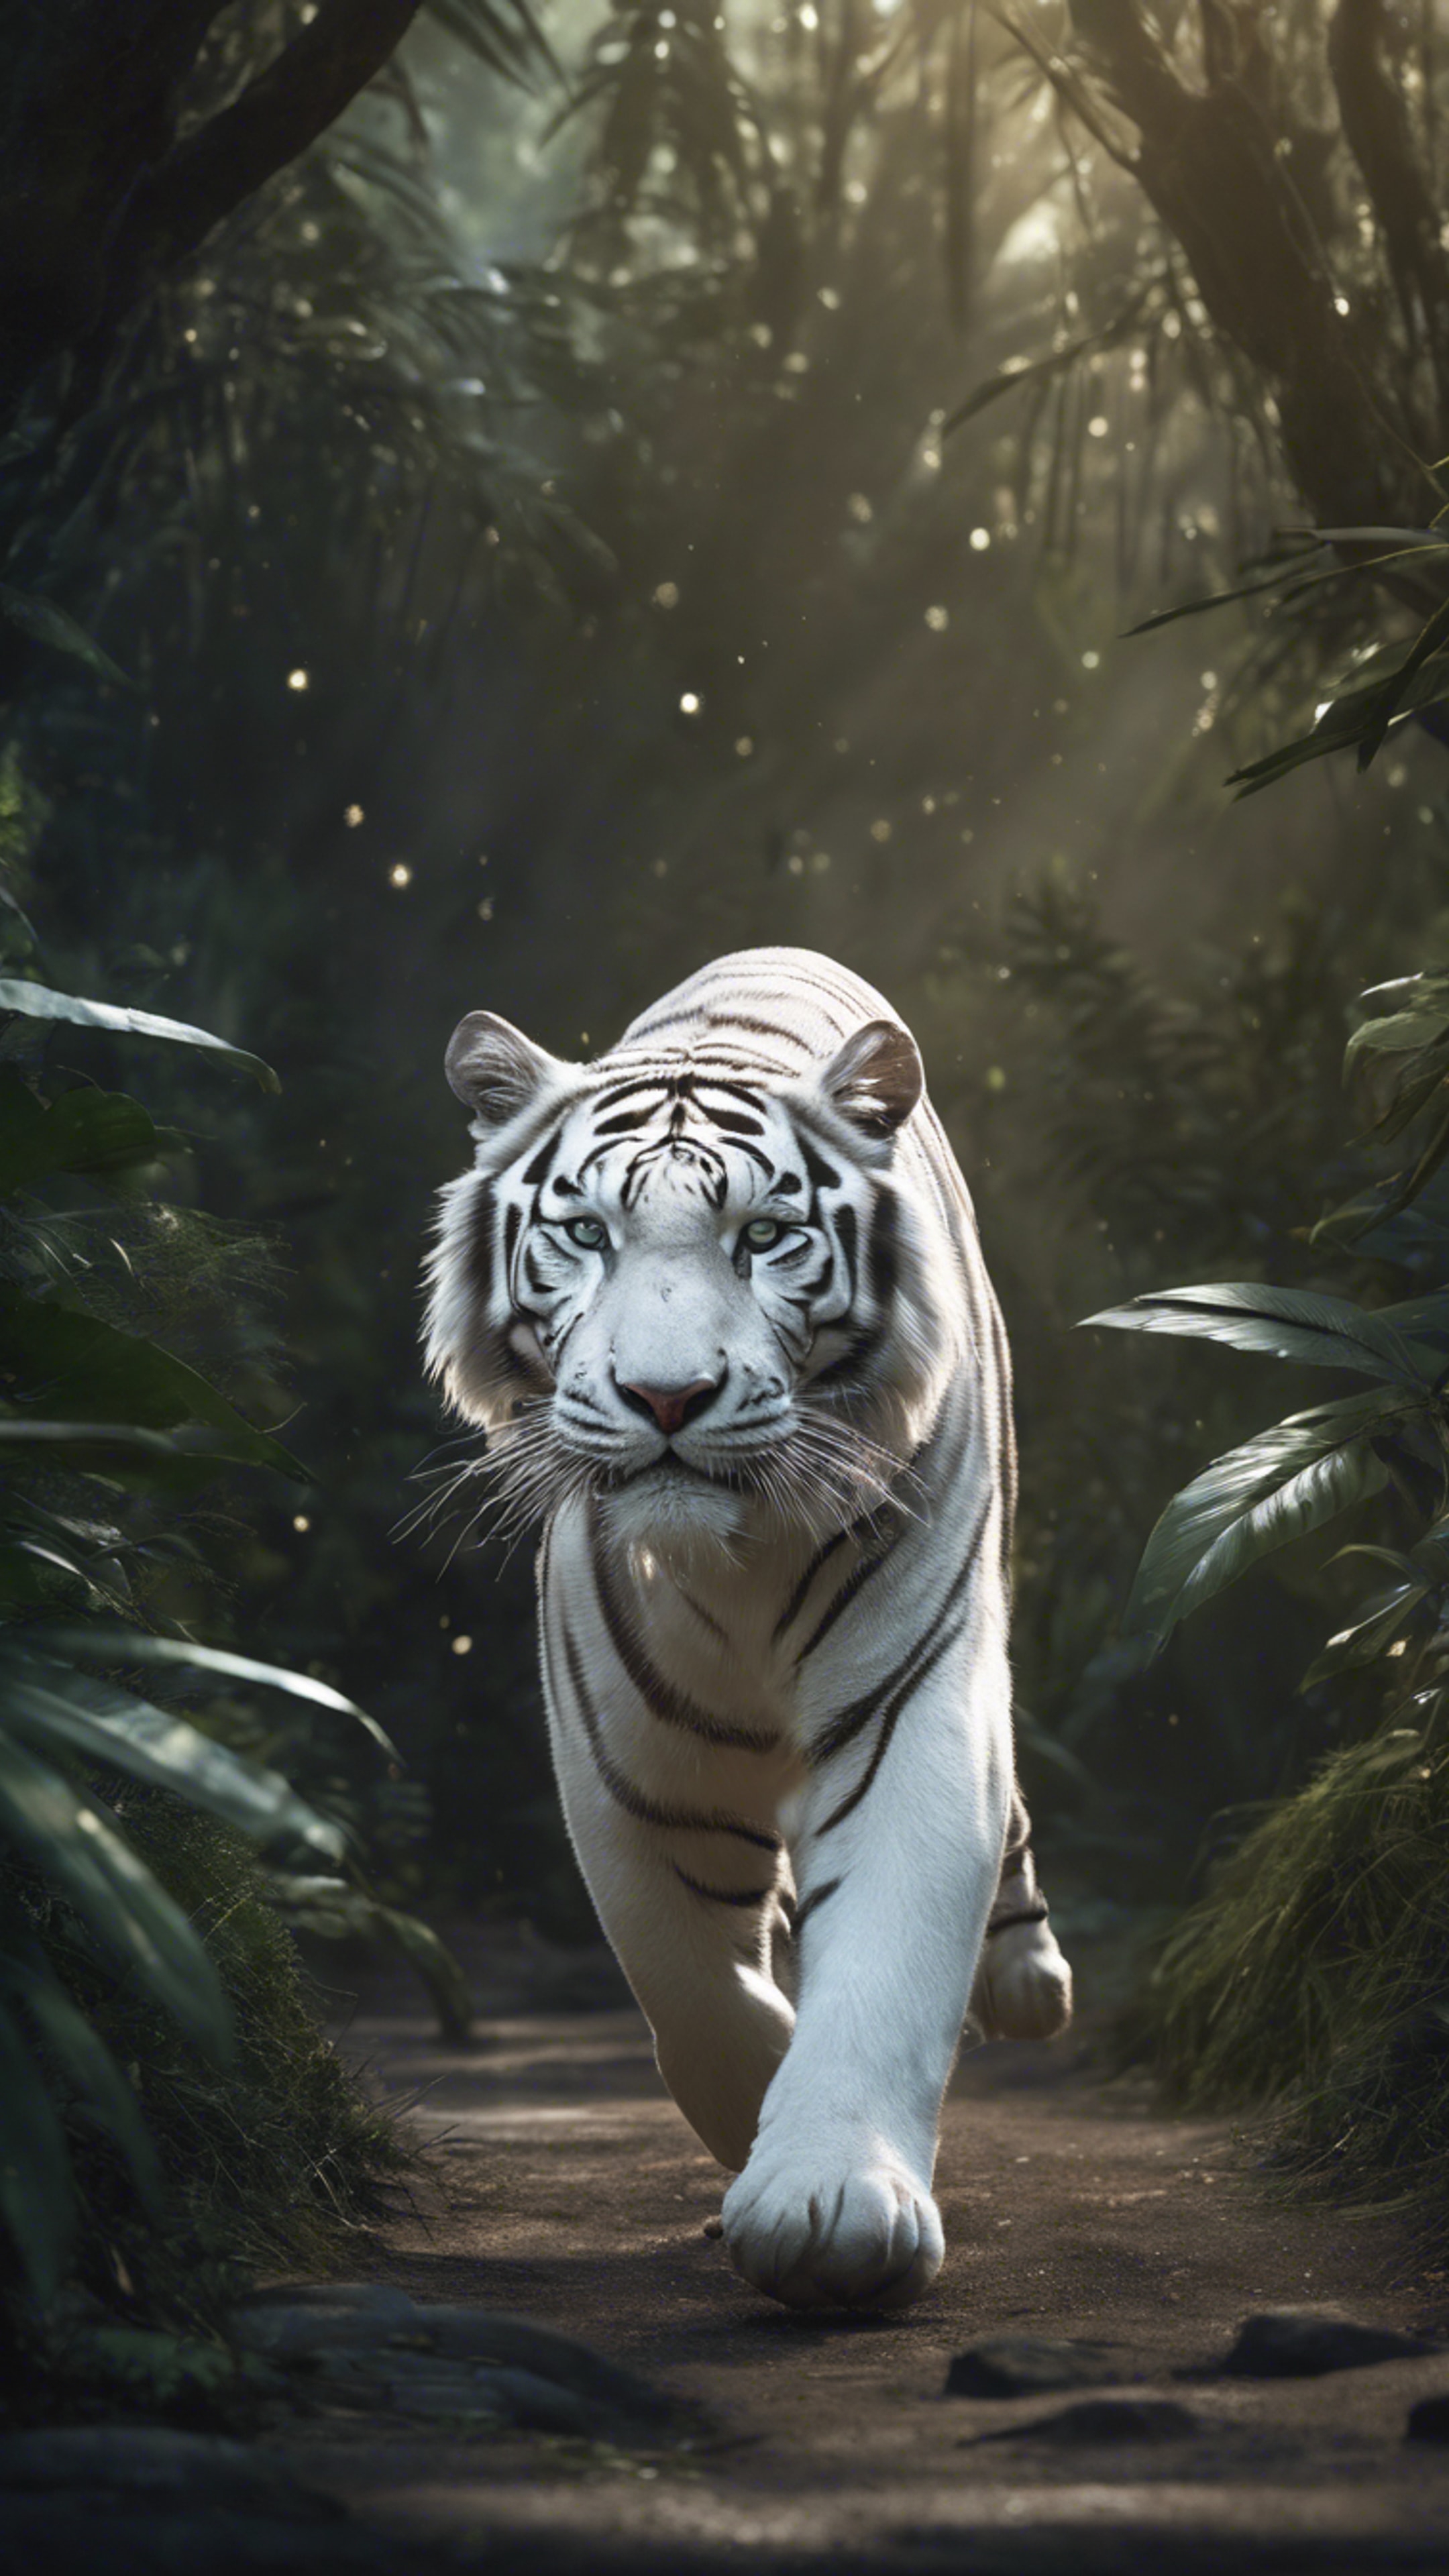 A cool white tiger, with silver stripes, strides powerfully through a moonlit jungle. Papel de parede[5d9925a4be334da199e0]